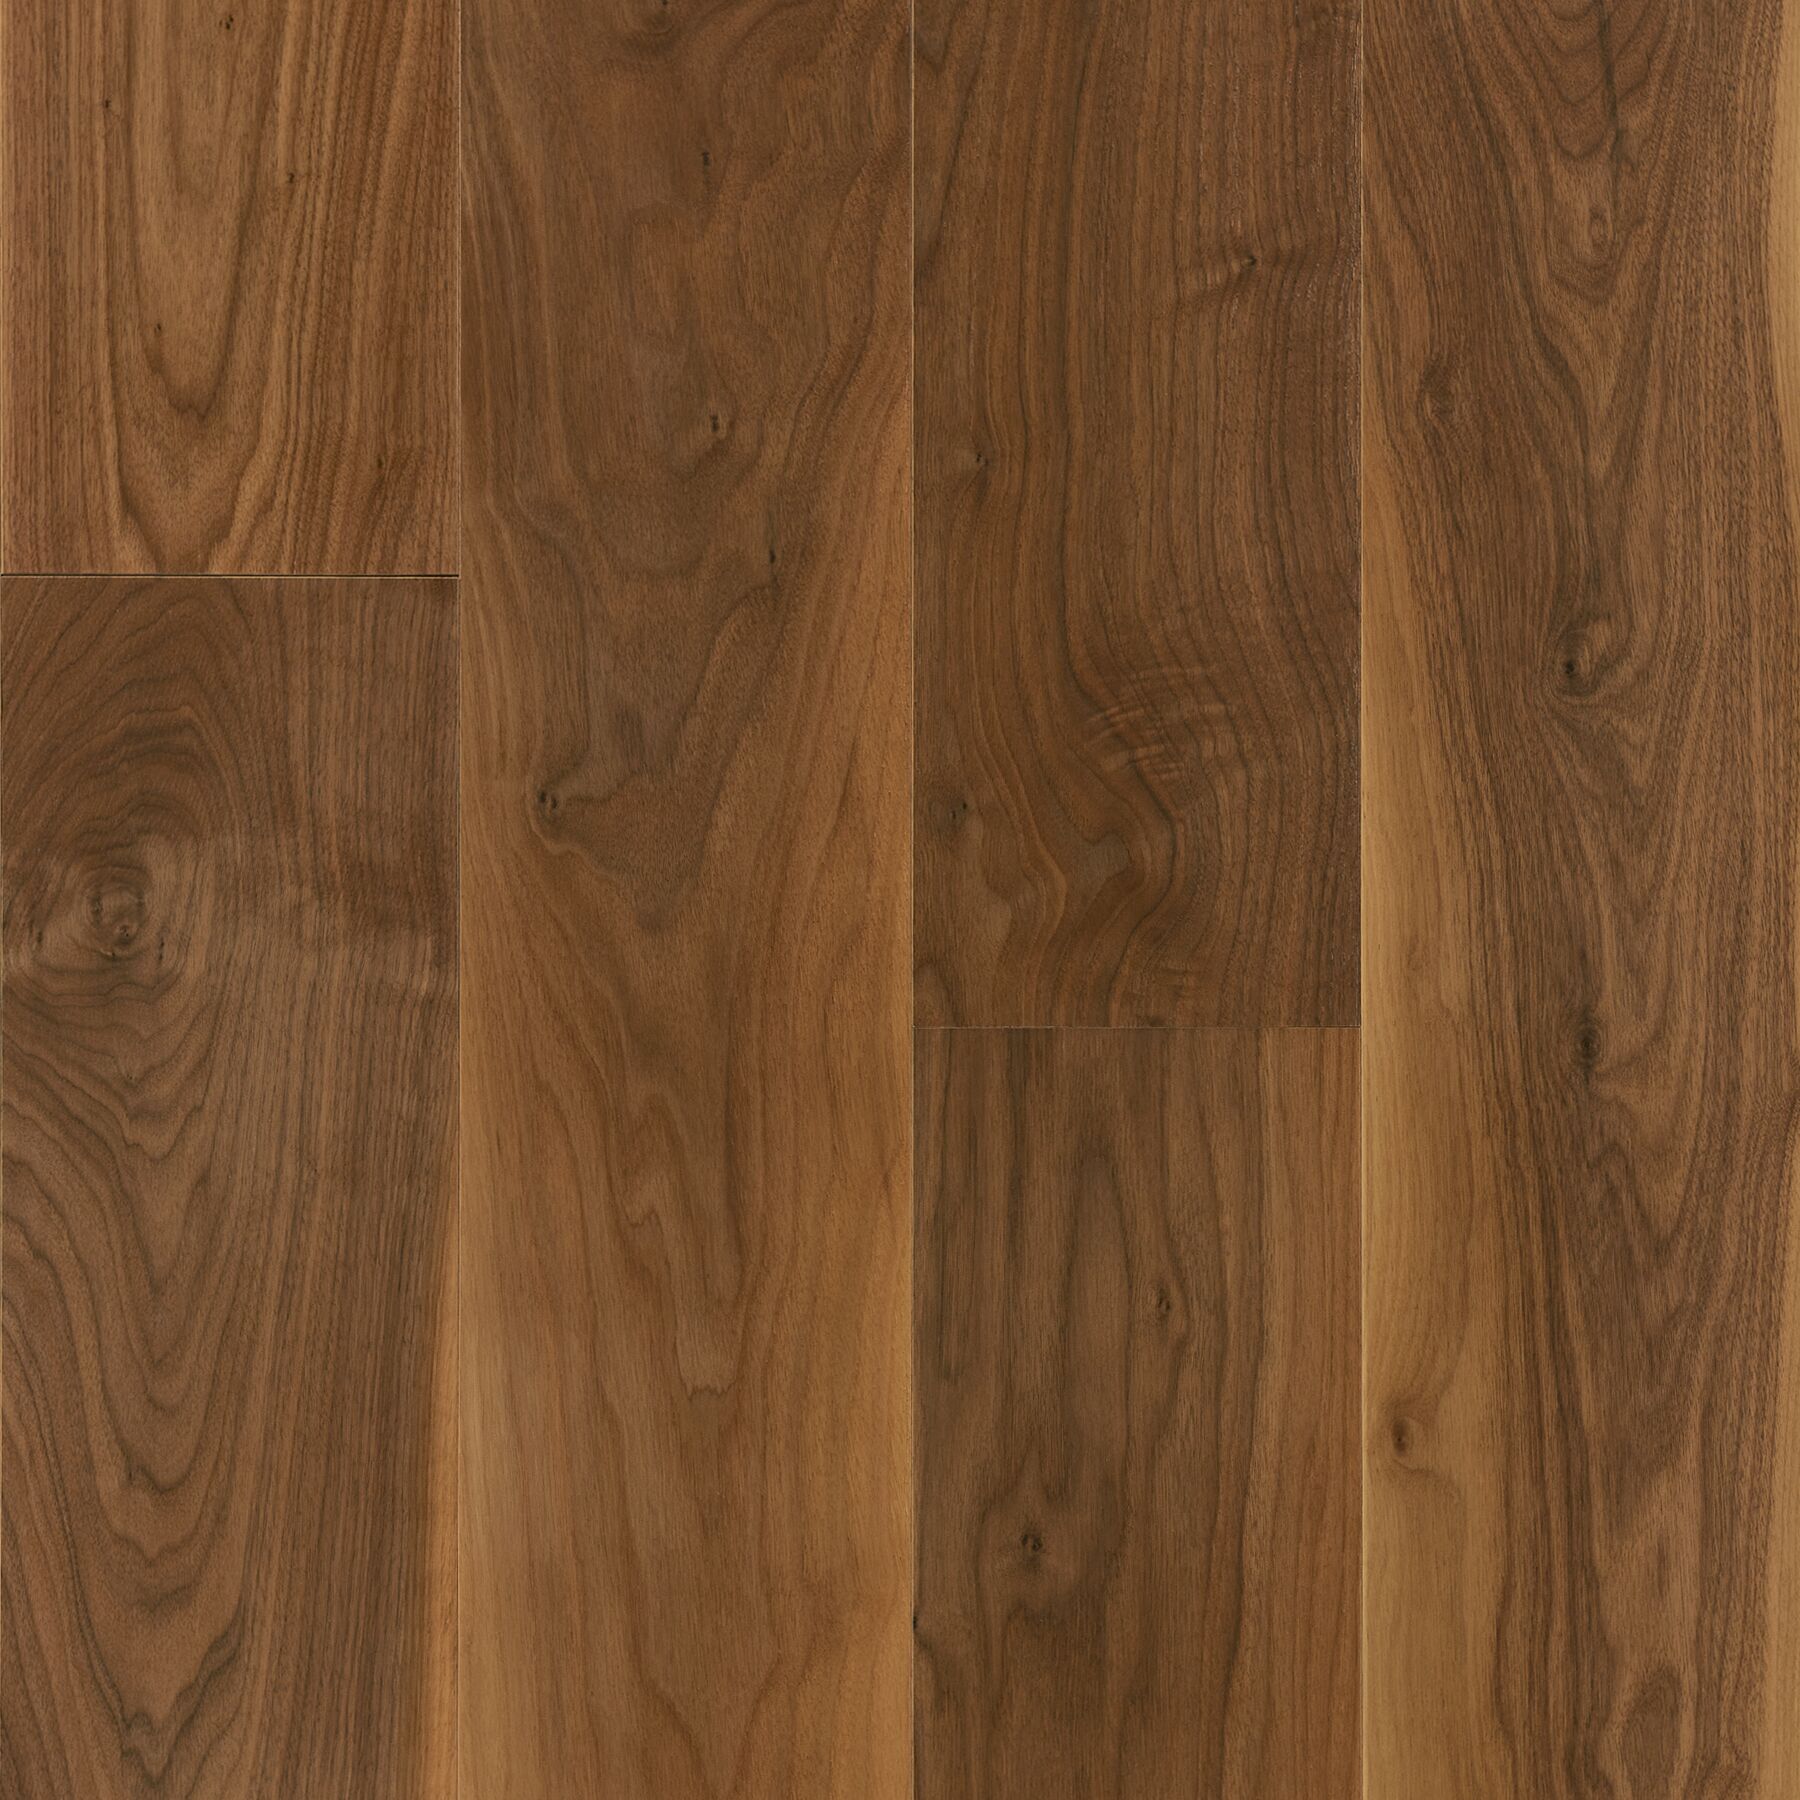 Walnut Engineered Hardwood Ewdg85l12w, How To Install Bruce Engineered Hardwood Flooring